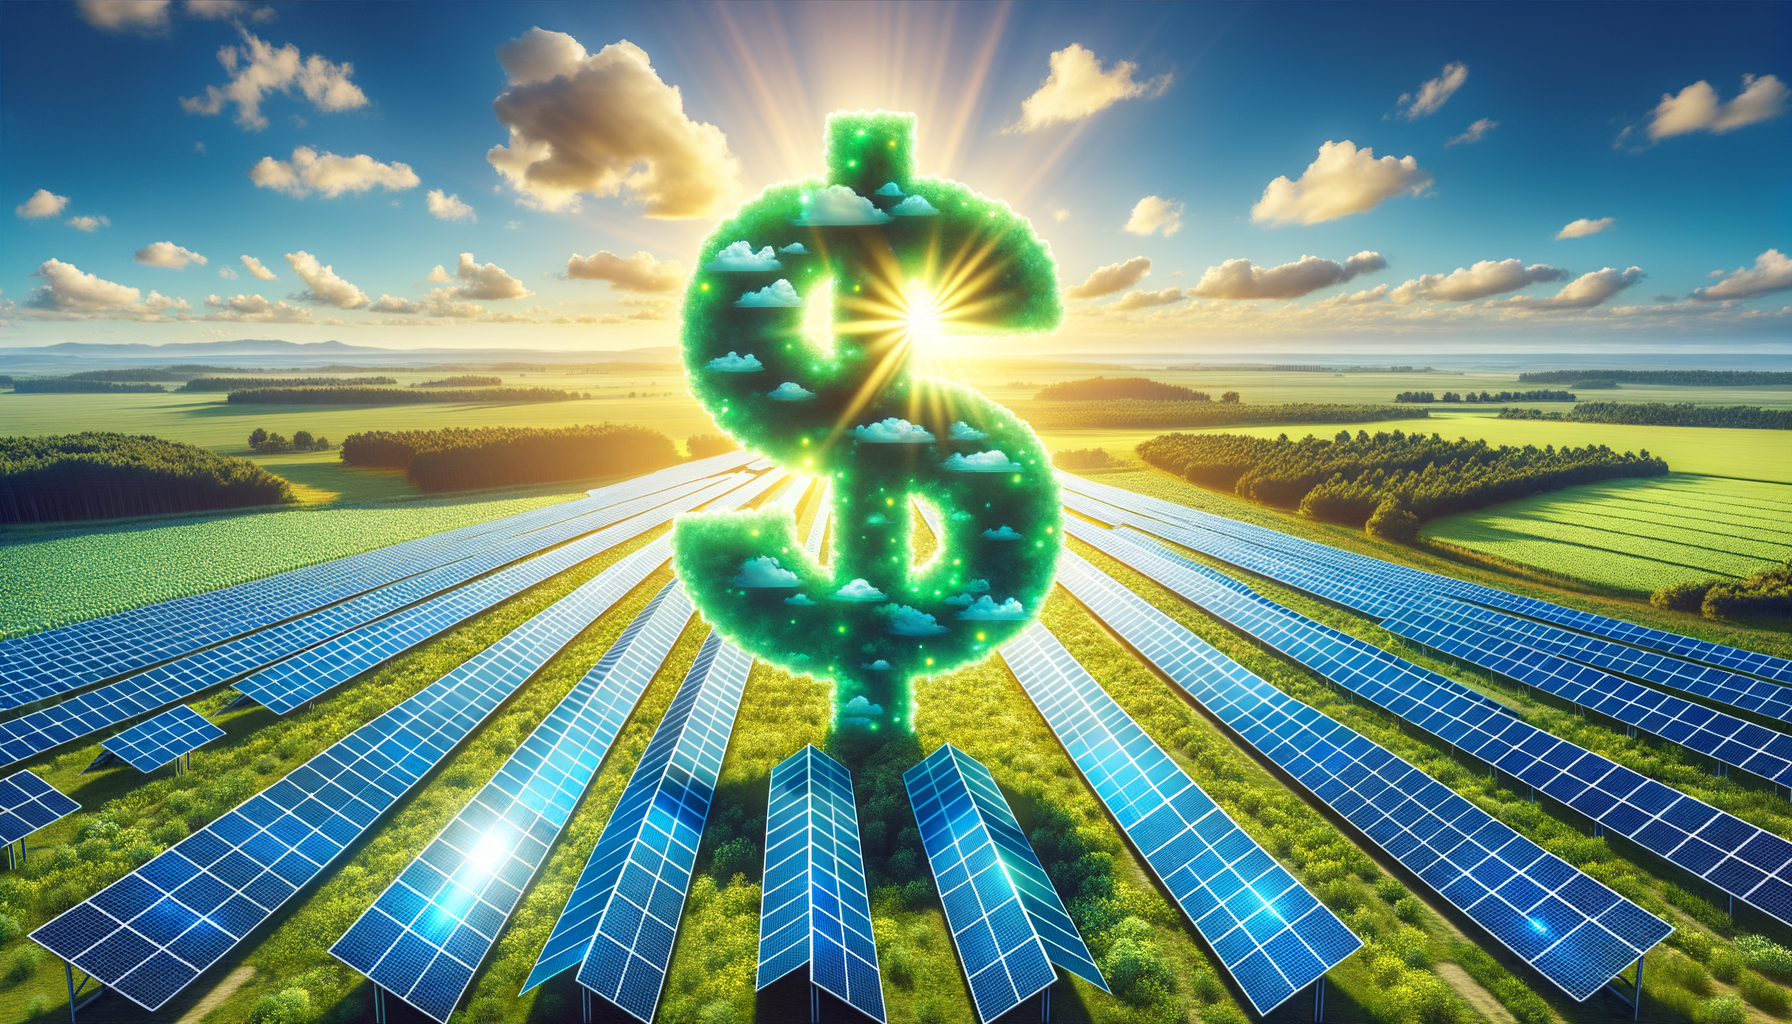 ALT: Savings on solar panel installations